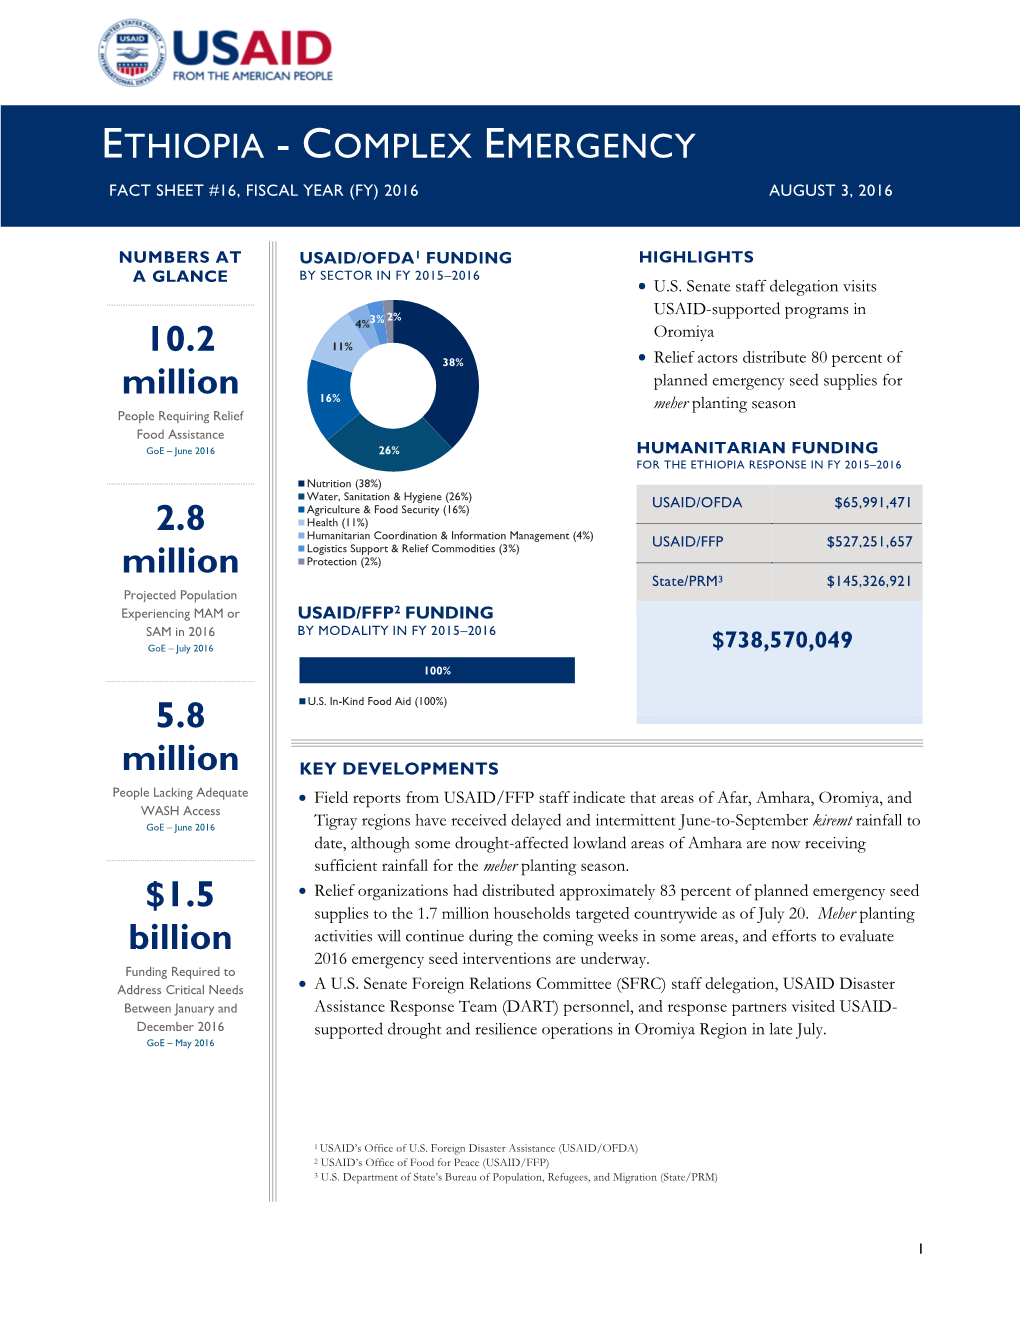 Ethiopia Complex Emergency Fact Sheet #6